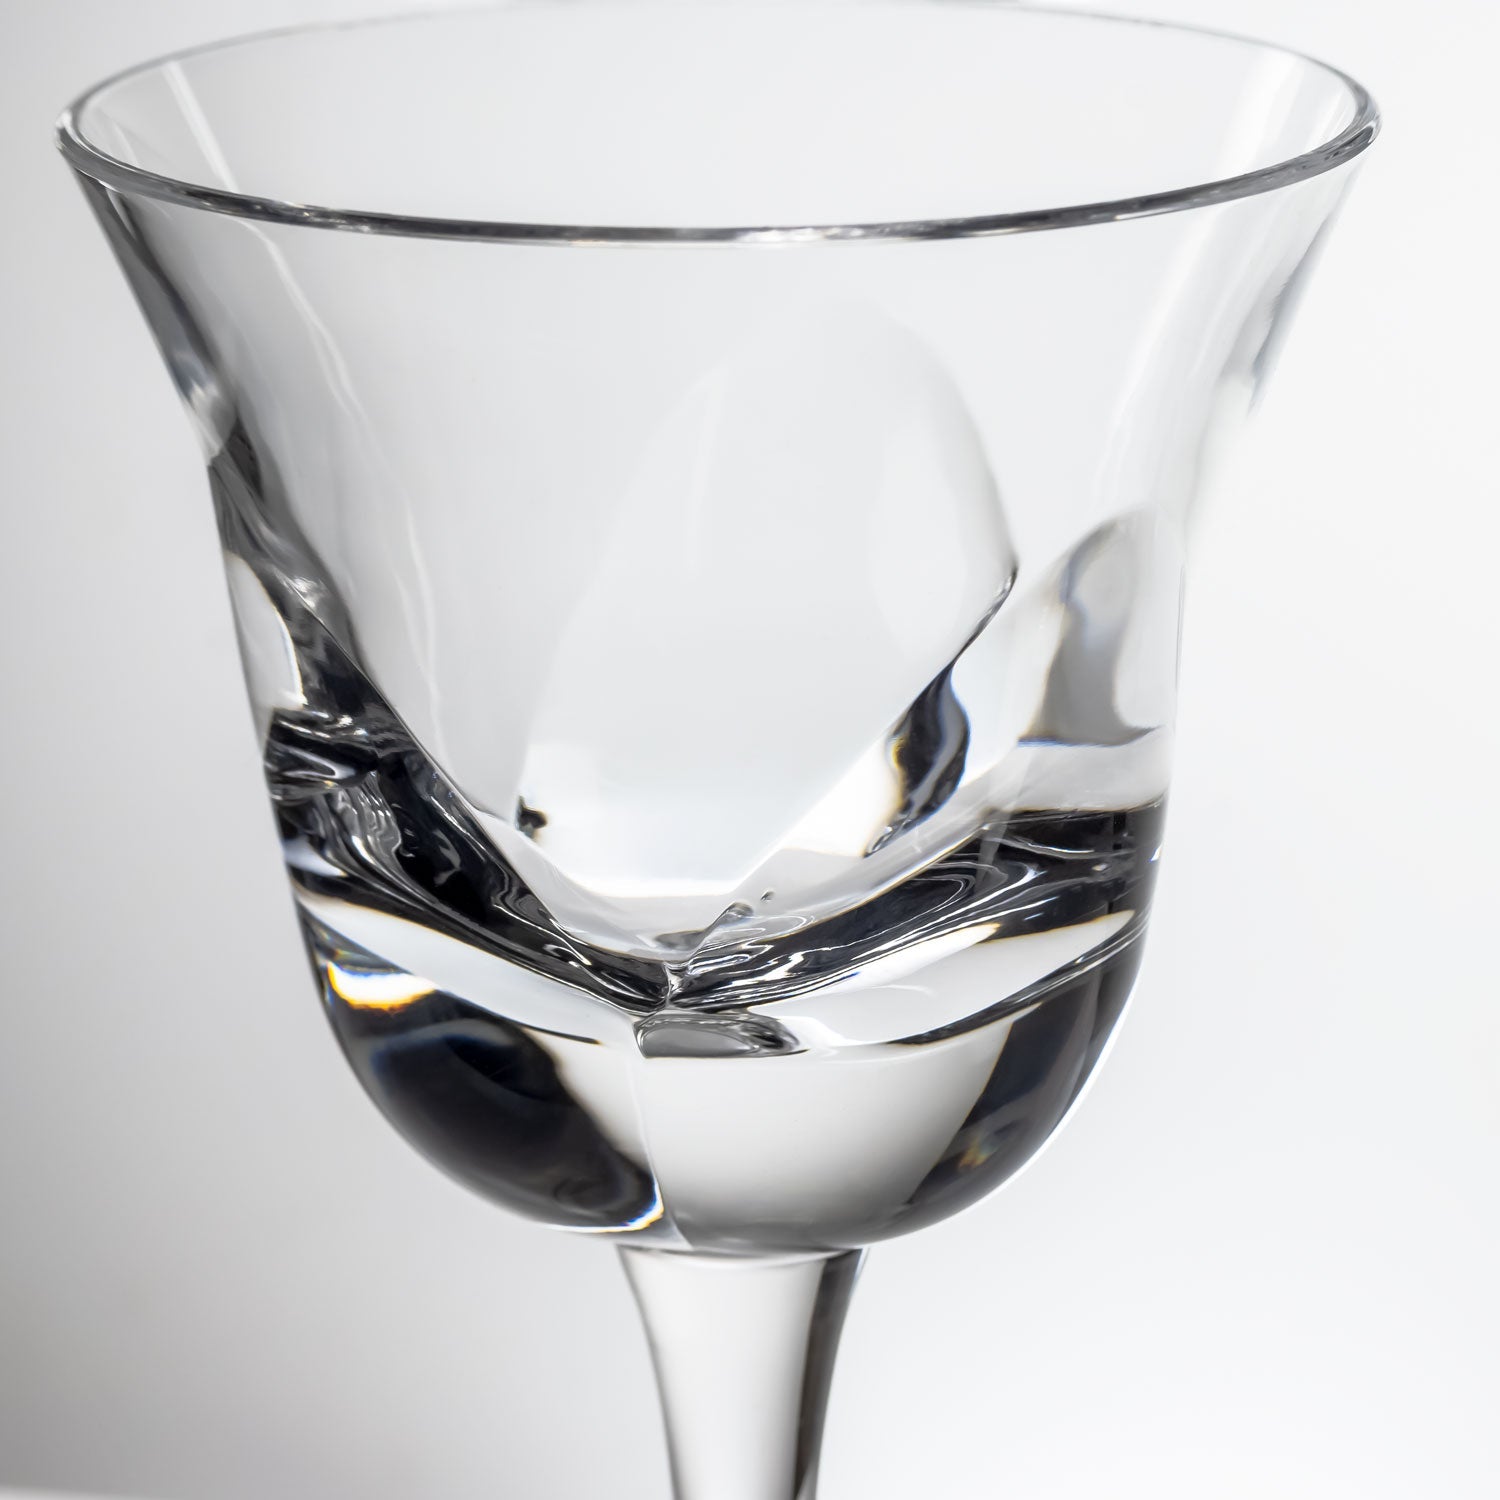 Merritt Designs Fiori 10oz Clear Acrylic Wine Stemware